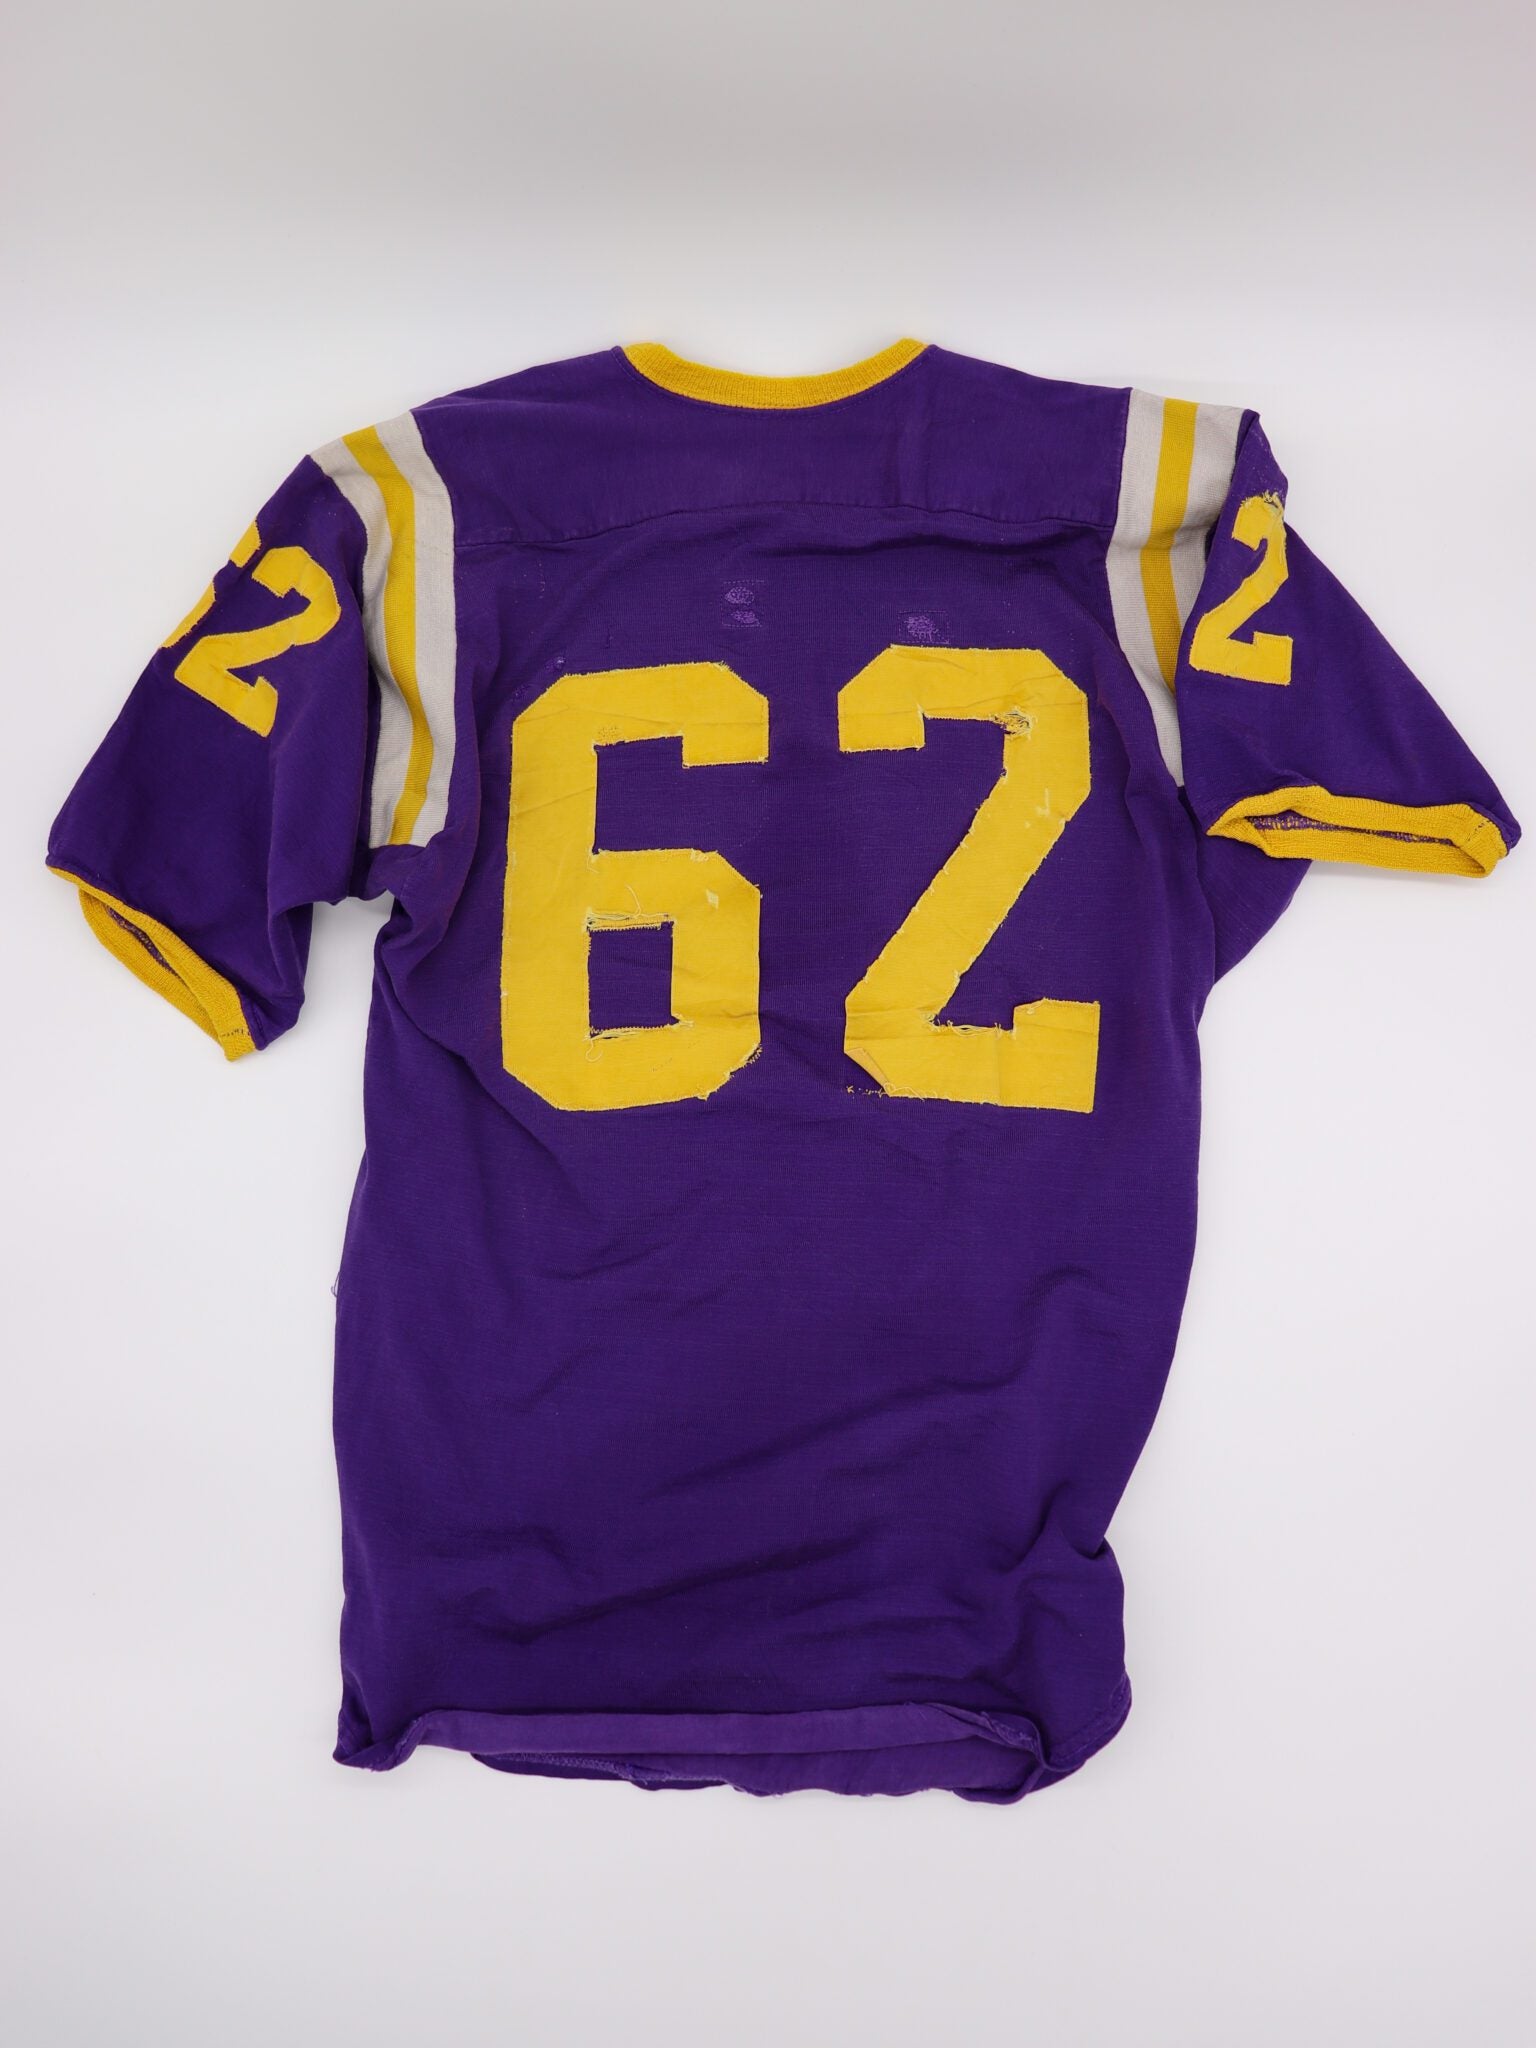 Very Rare 1960’s LSU Tigers Purple Durene Football Jersey, Fair/Good